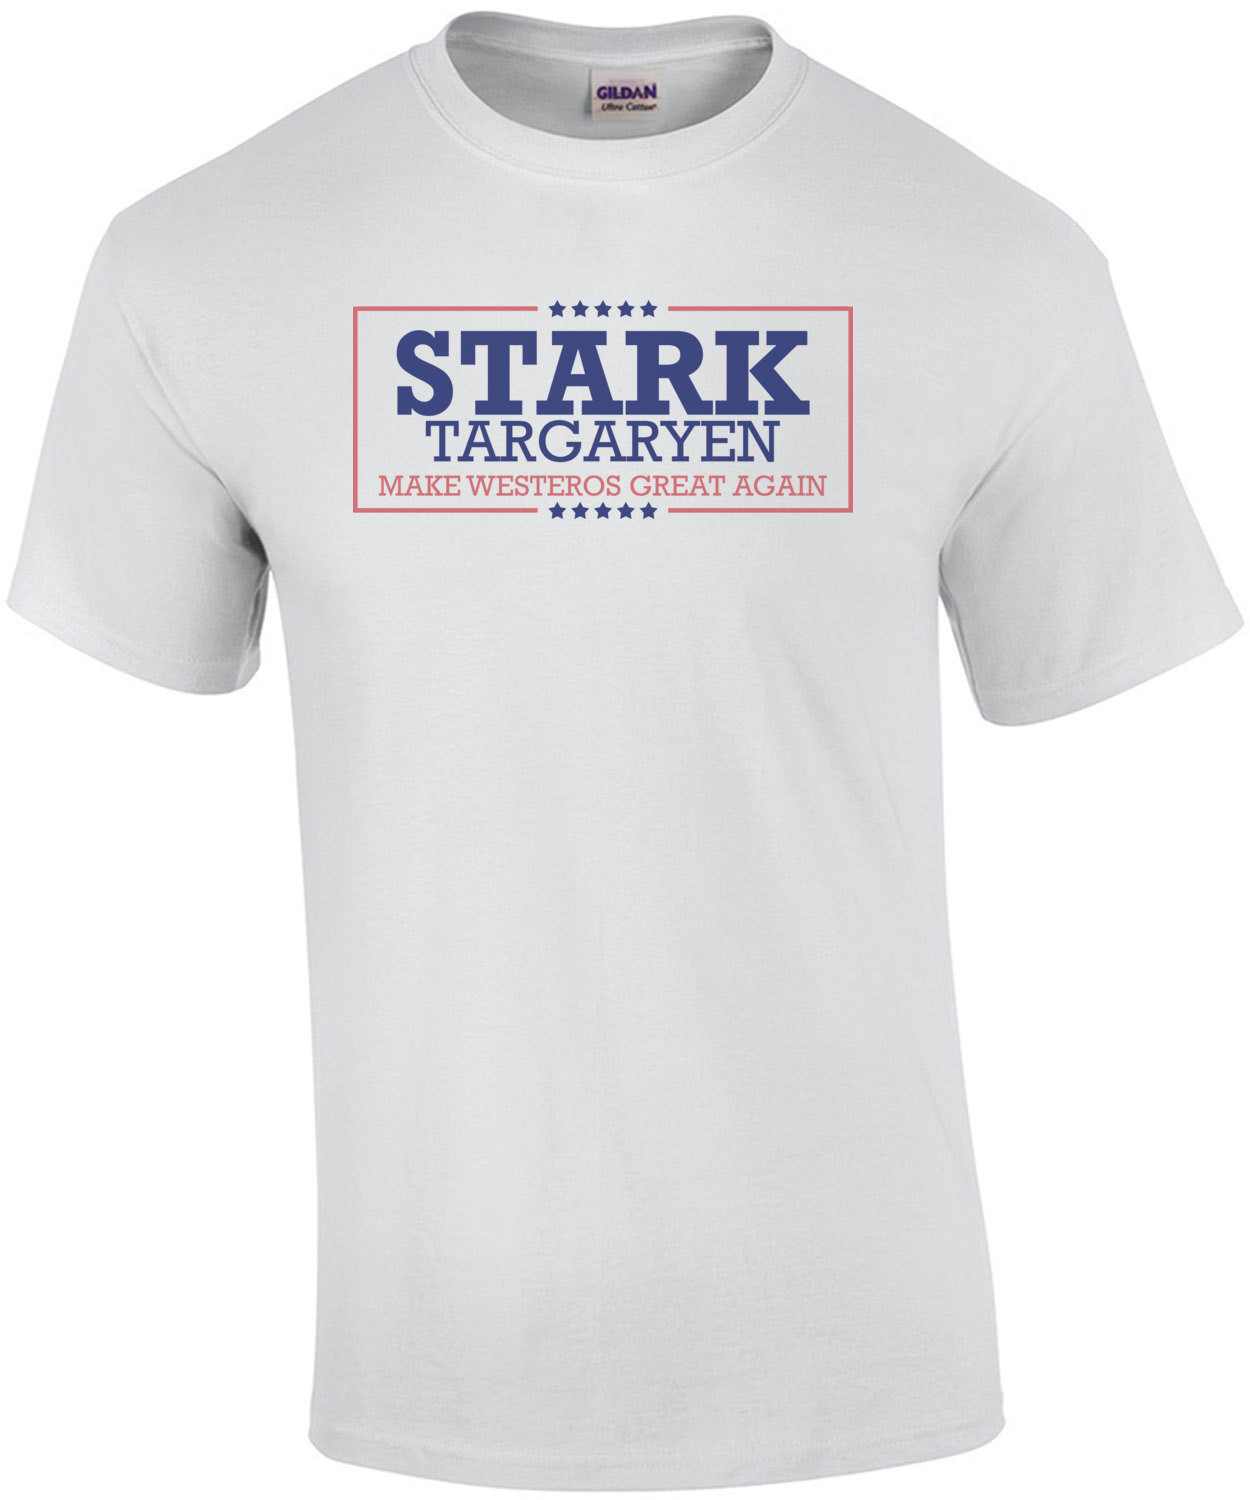 Stark Targaryen Make Westeros Great Again Game of Thrones T-Shirt